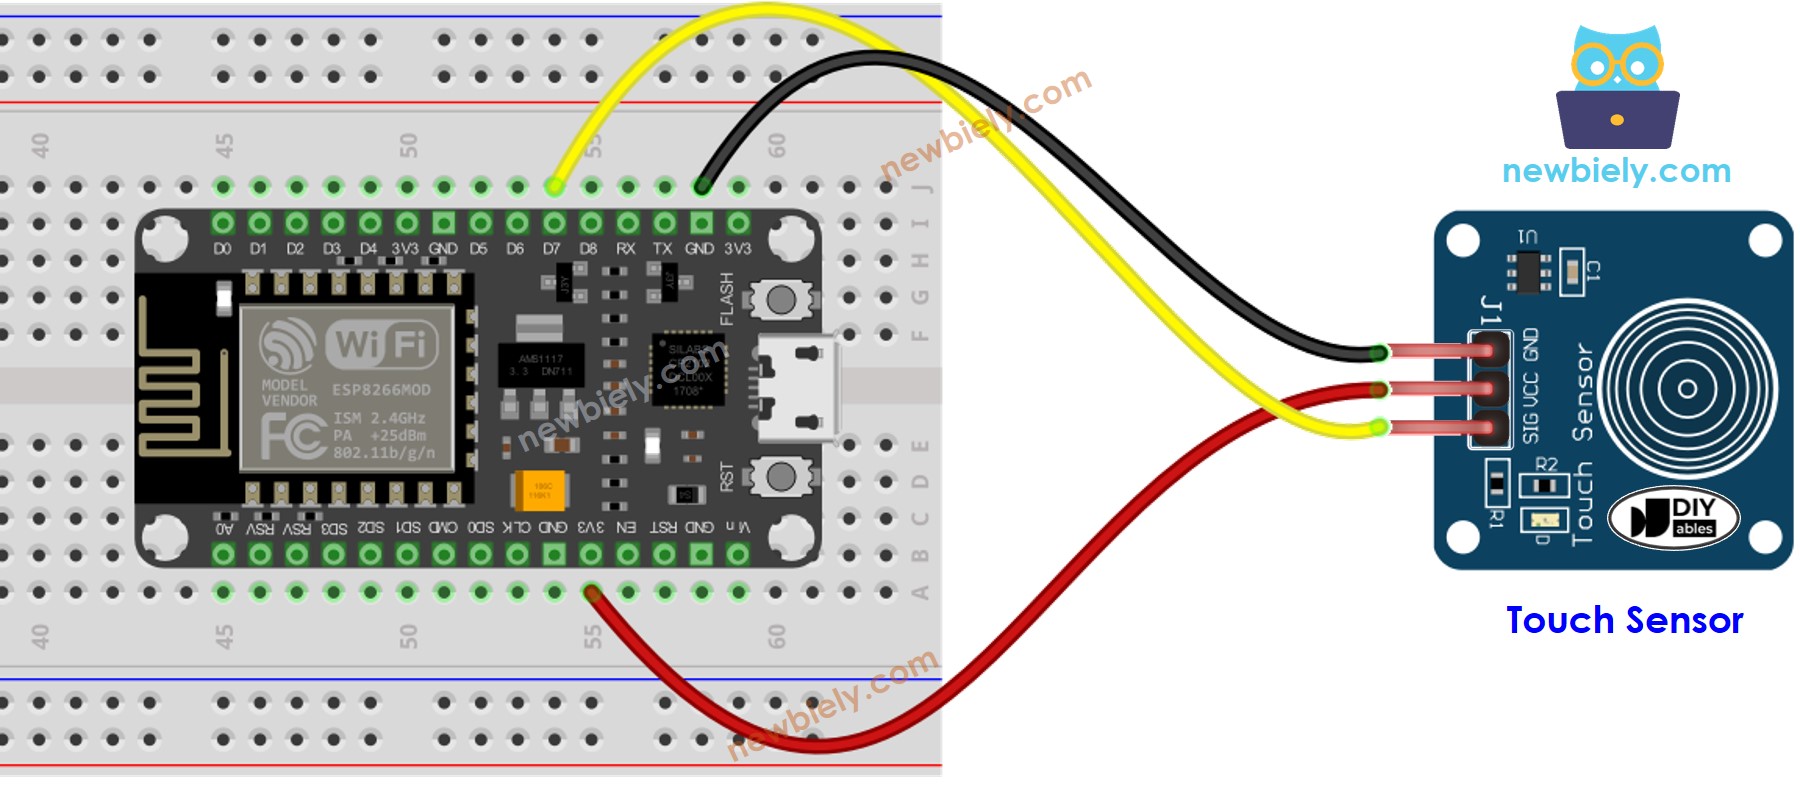 The wiring diagram between ESP8266 NodeMCU and touch sensor